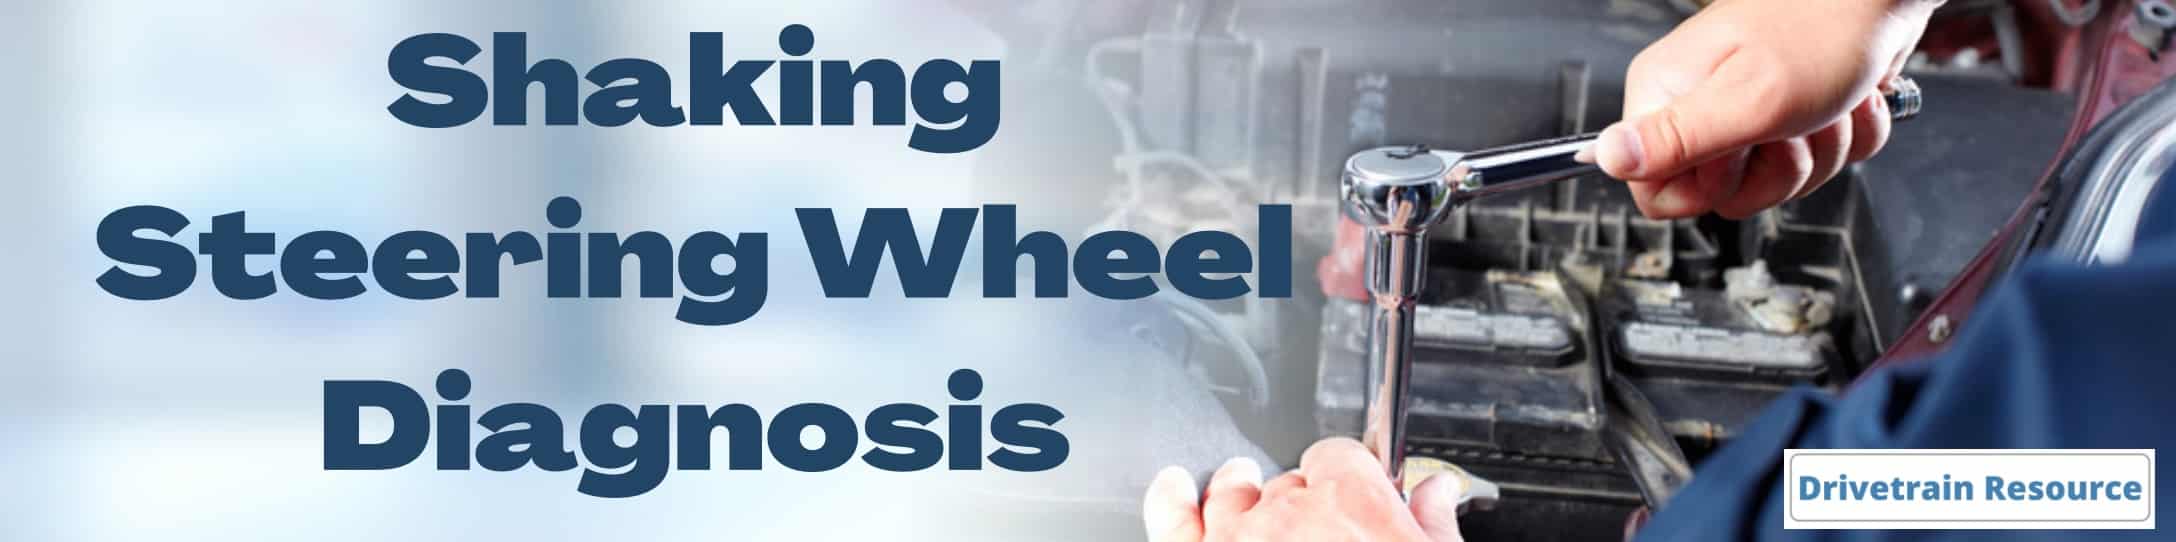 Shaking Steering Wheel Diagnosis